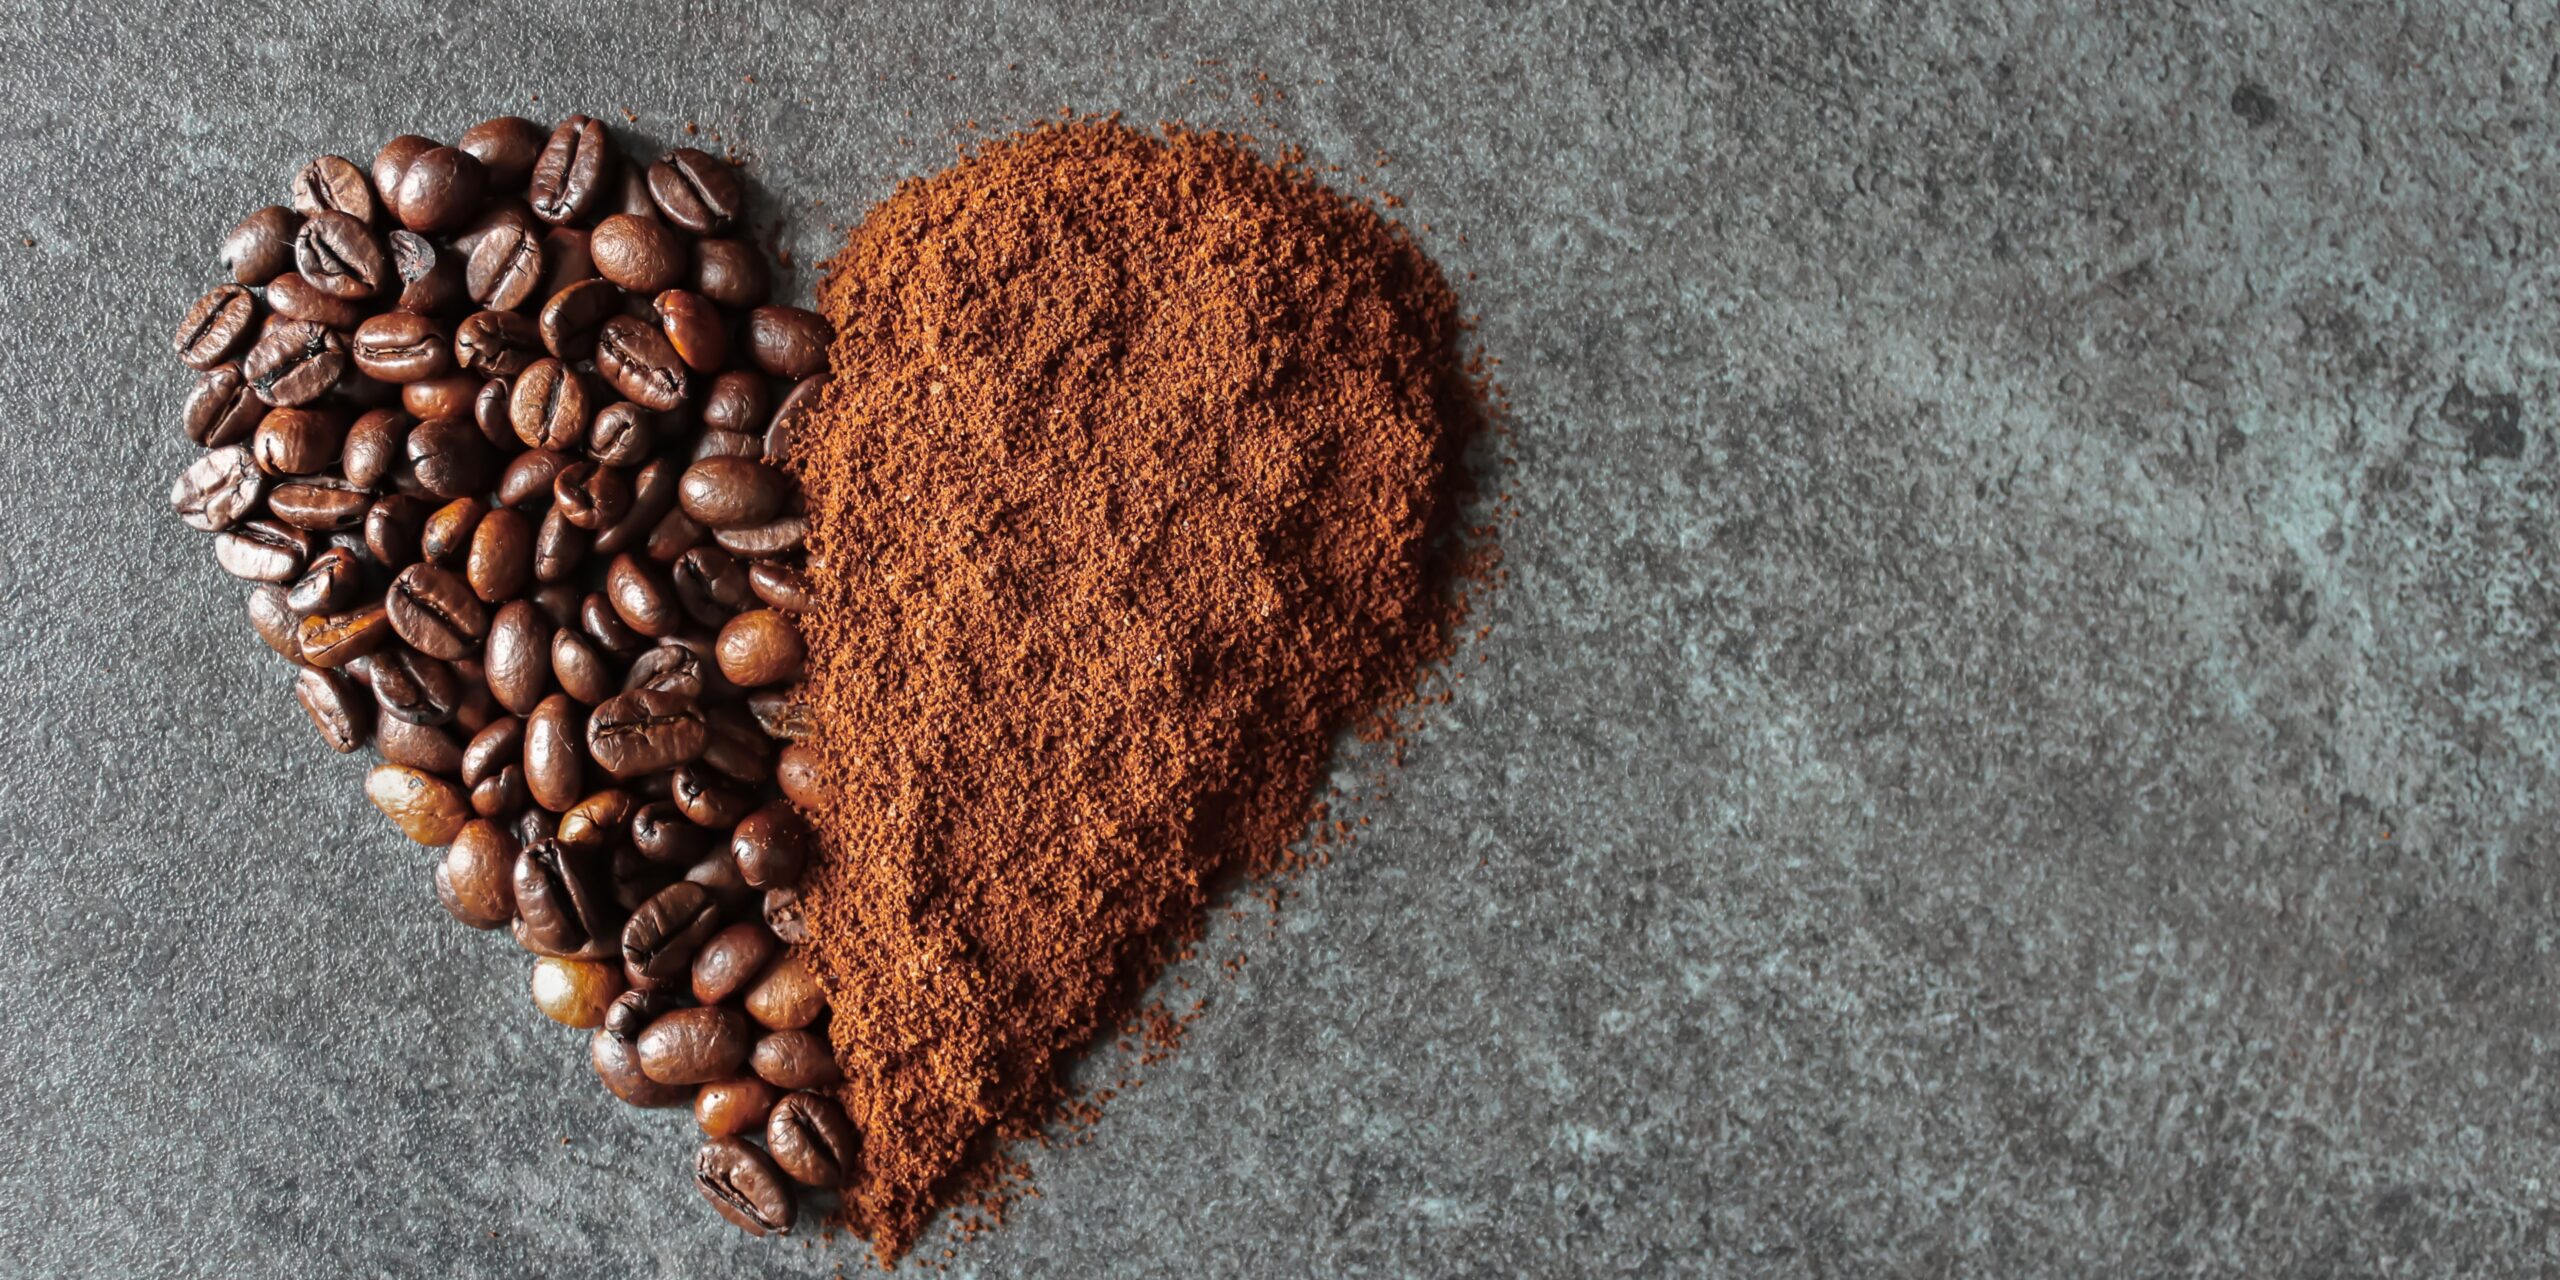 Eco-friendly coffee beans